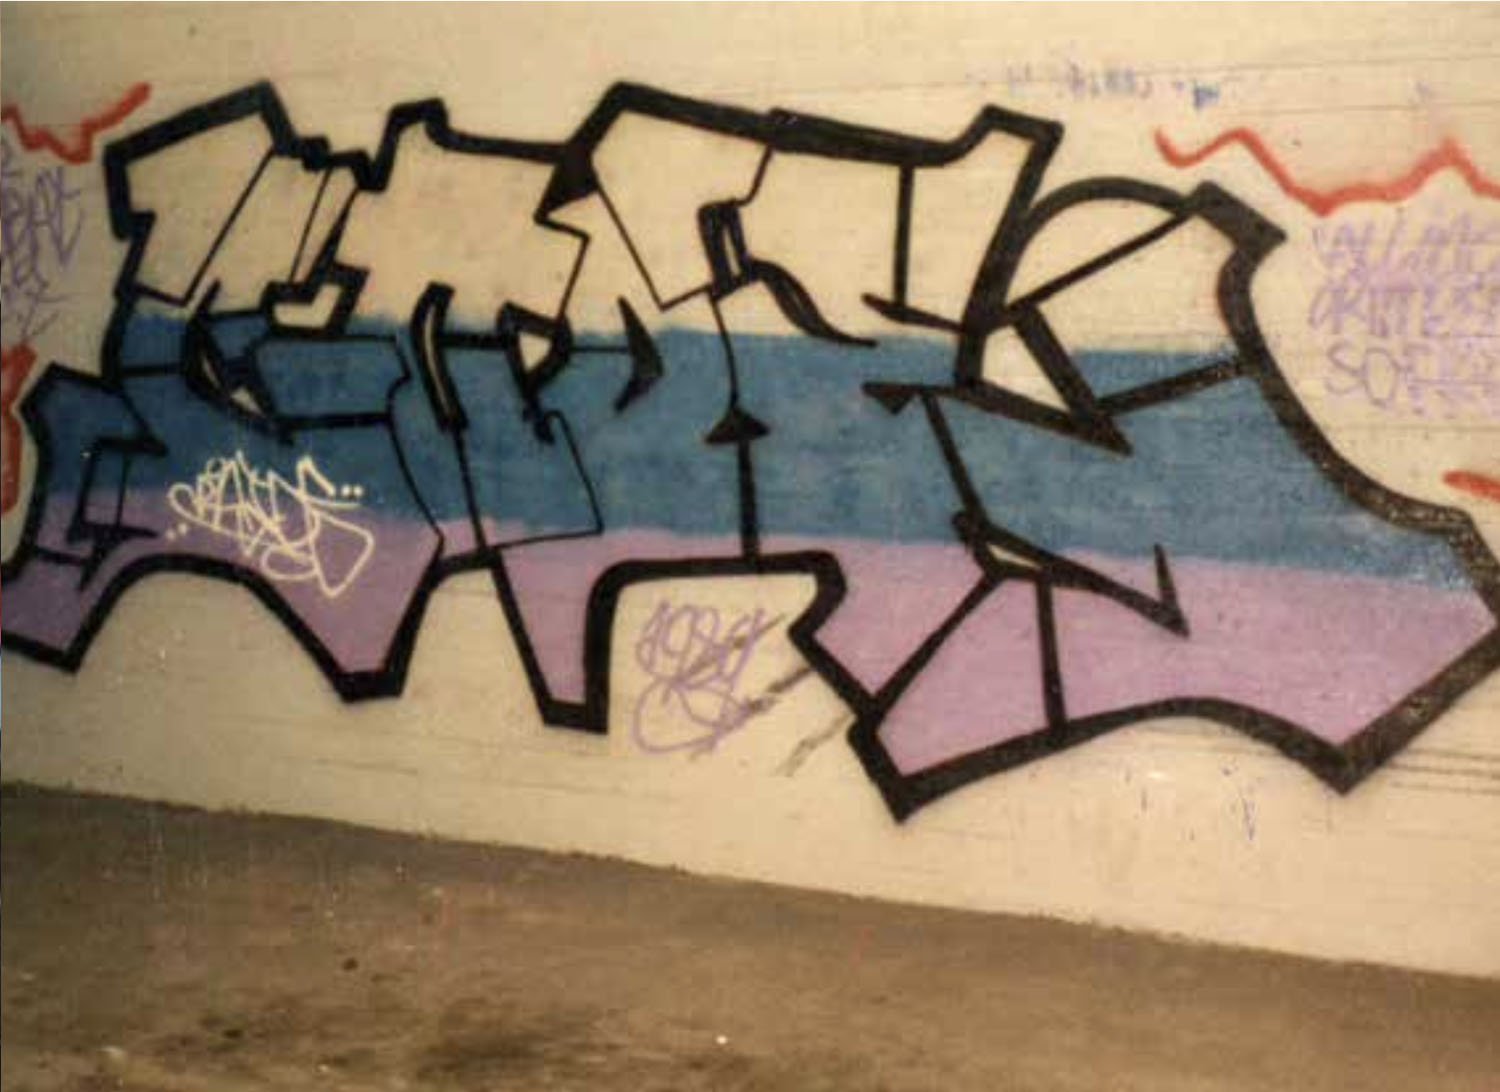  Raide, 1989 